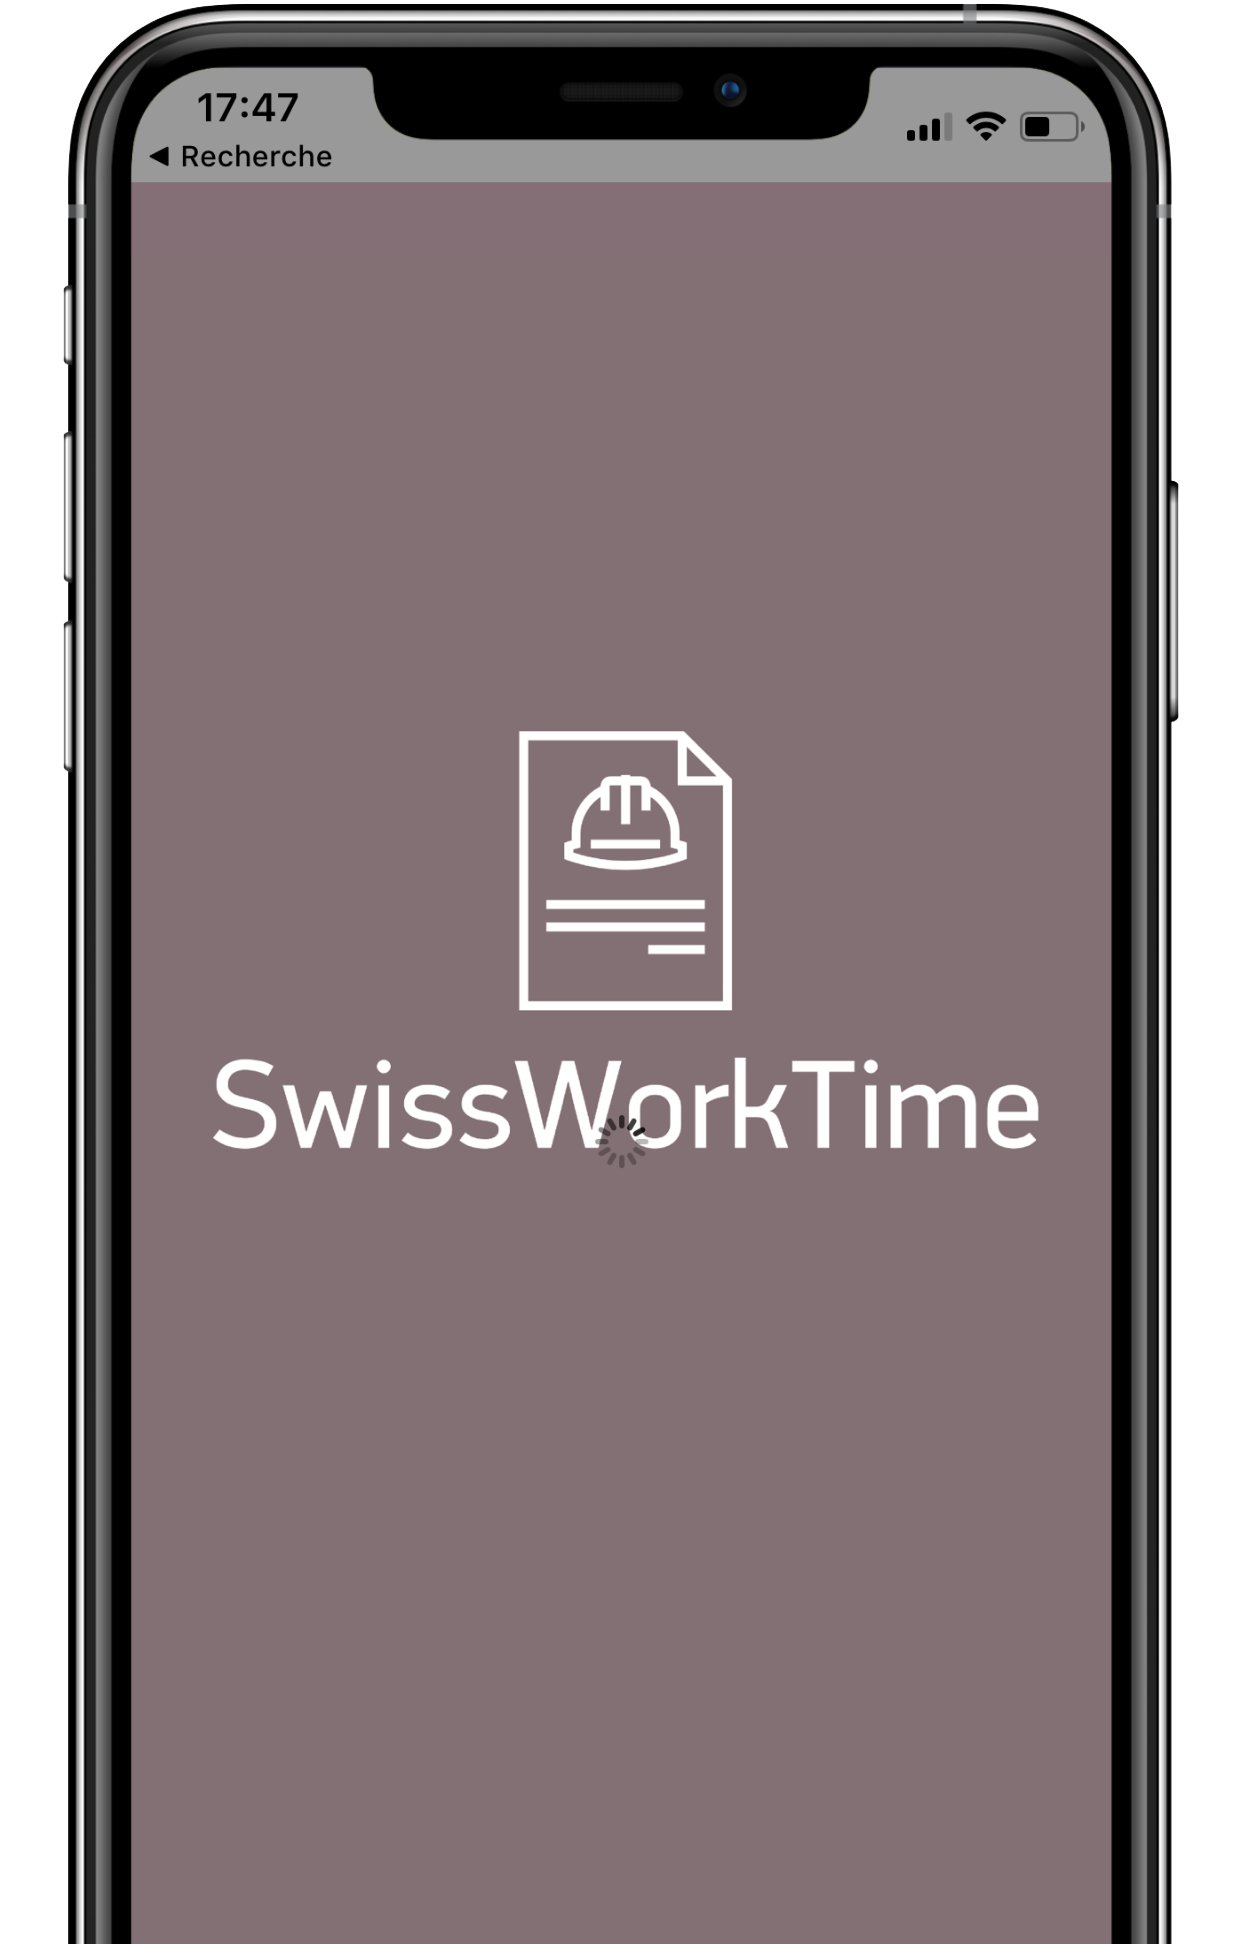 SwissWorkTime application start screen